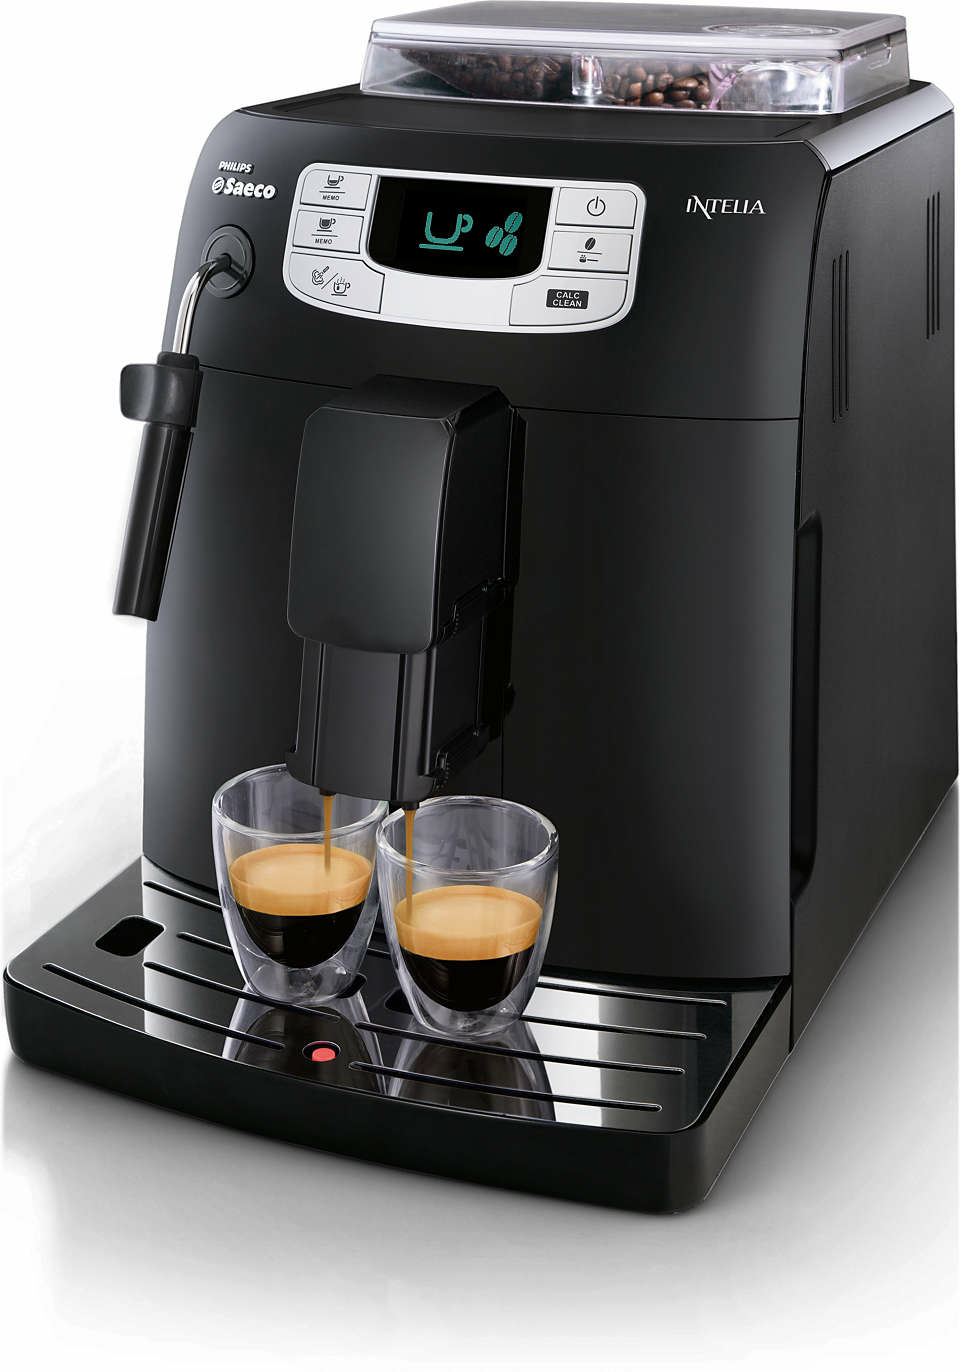 Saeco HD8751/13 coffee maker